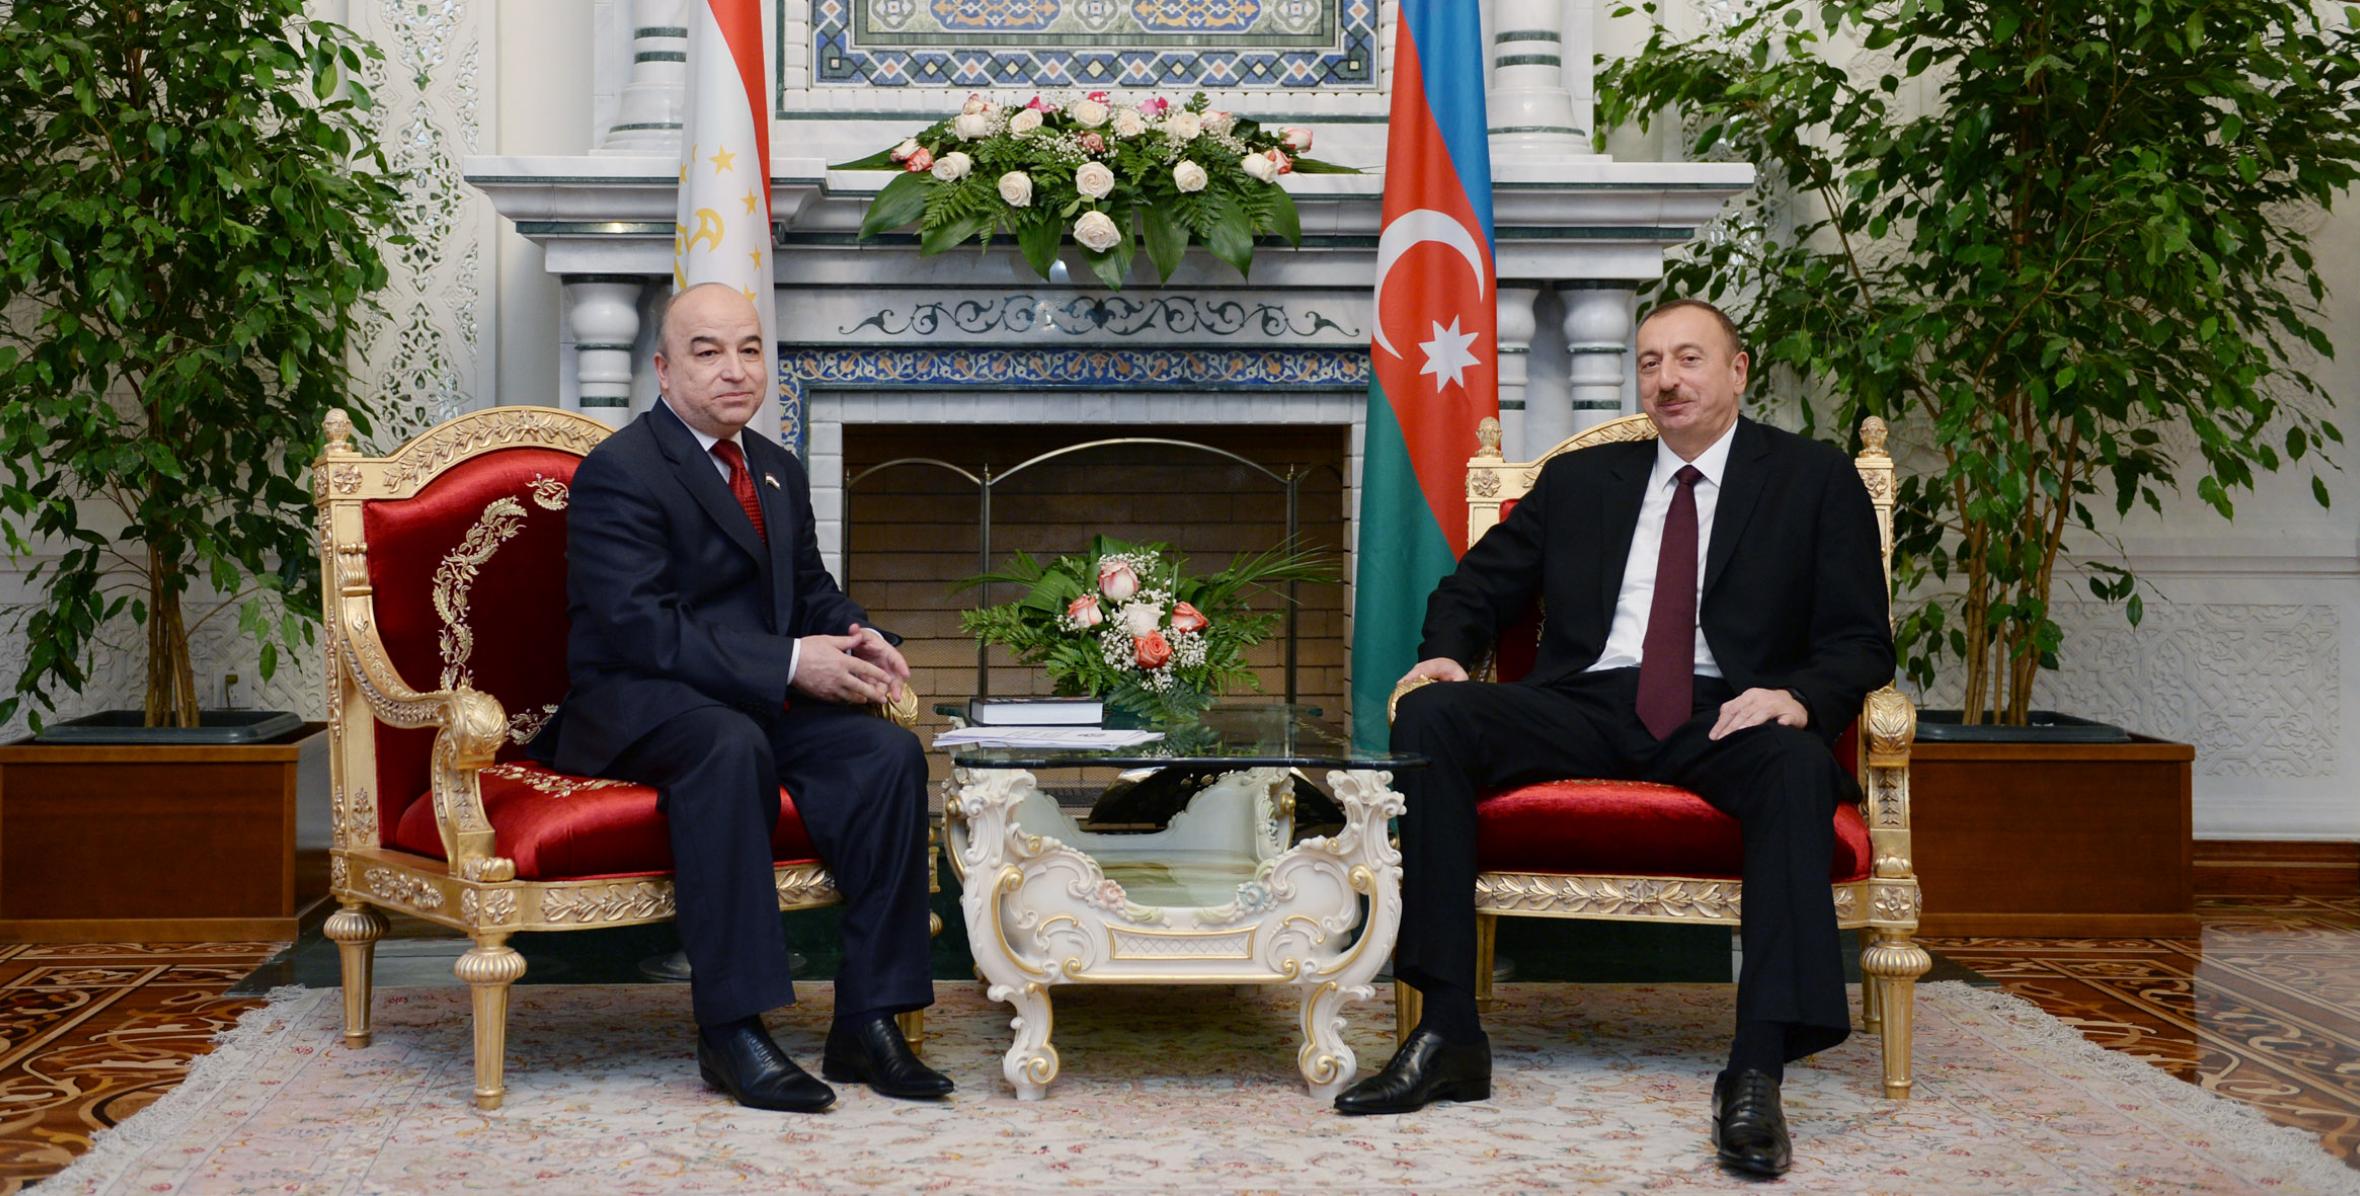 Ilham Aliyev met with the Speaker of the Lower House of the Majlisi Oli of Tajikistan Shukurjon Zuhurov